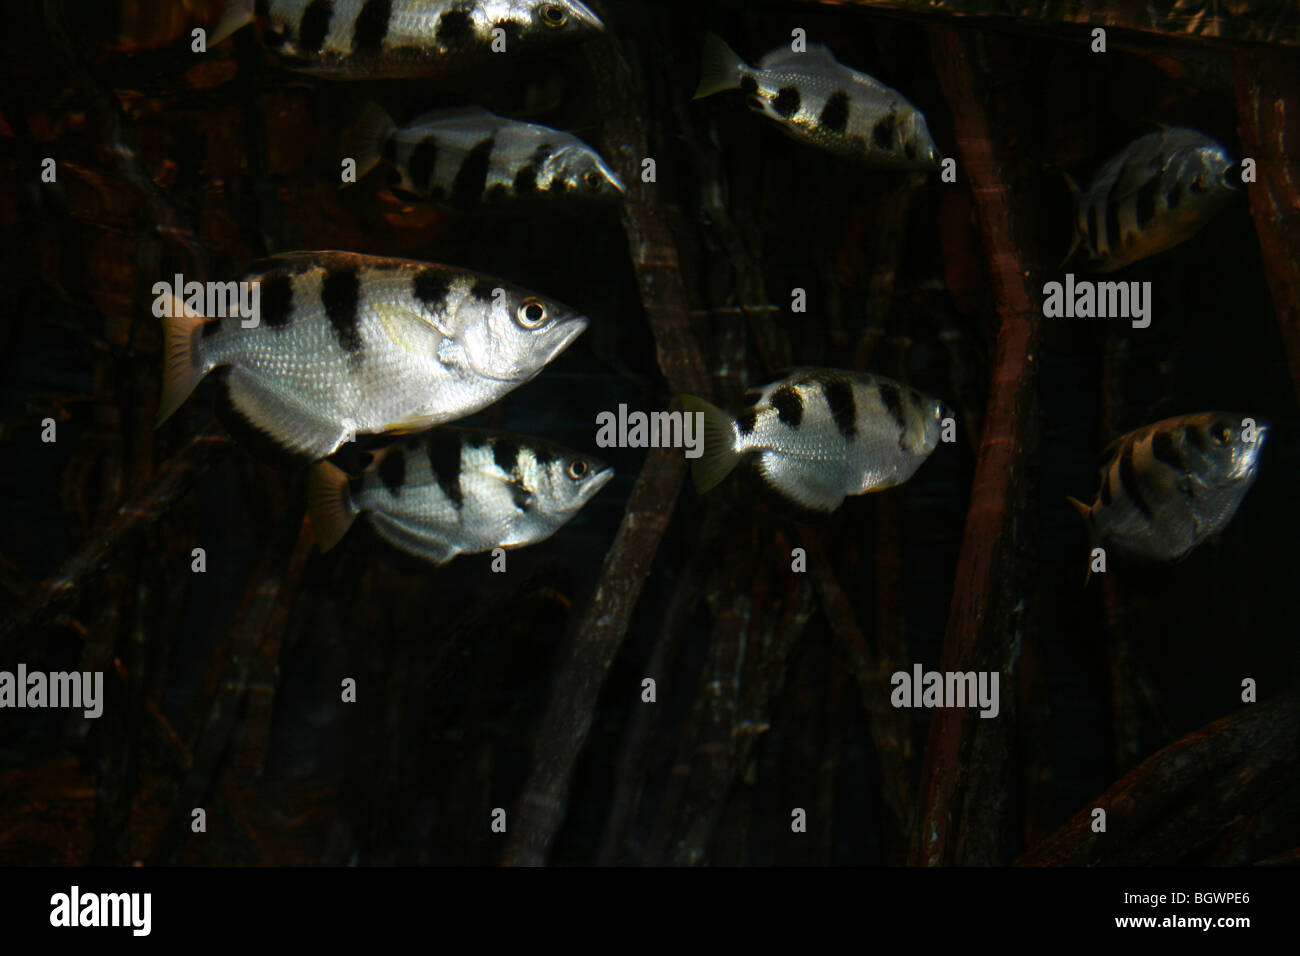 Shoal Of Banded Archerfish Toxotes jaculatrix Stock Photo